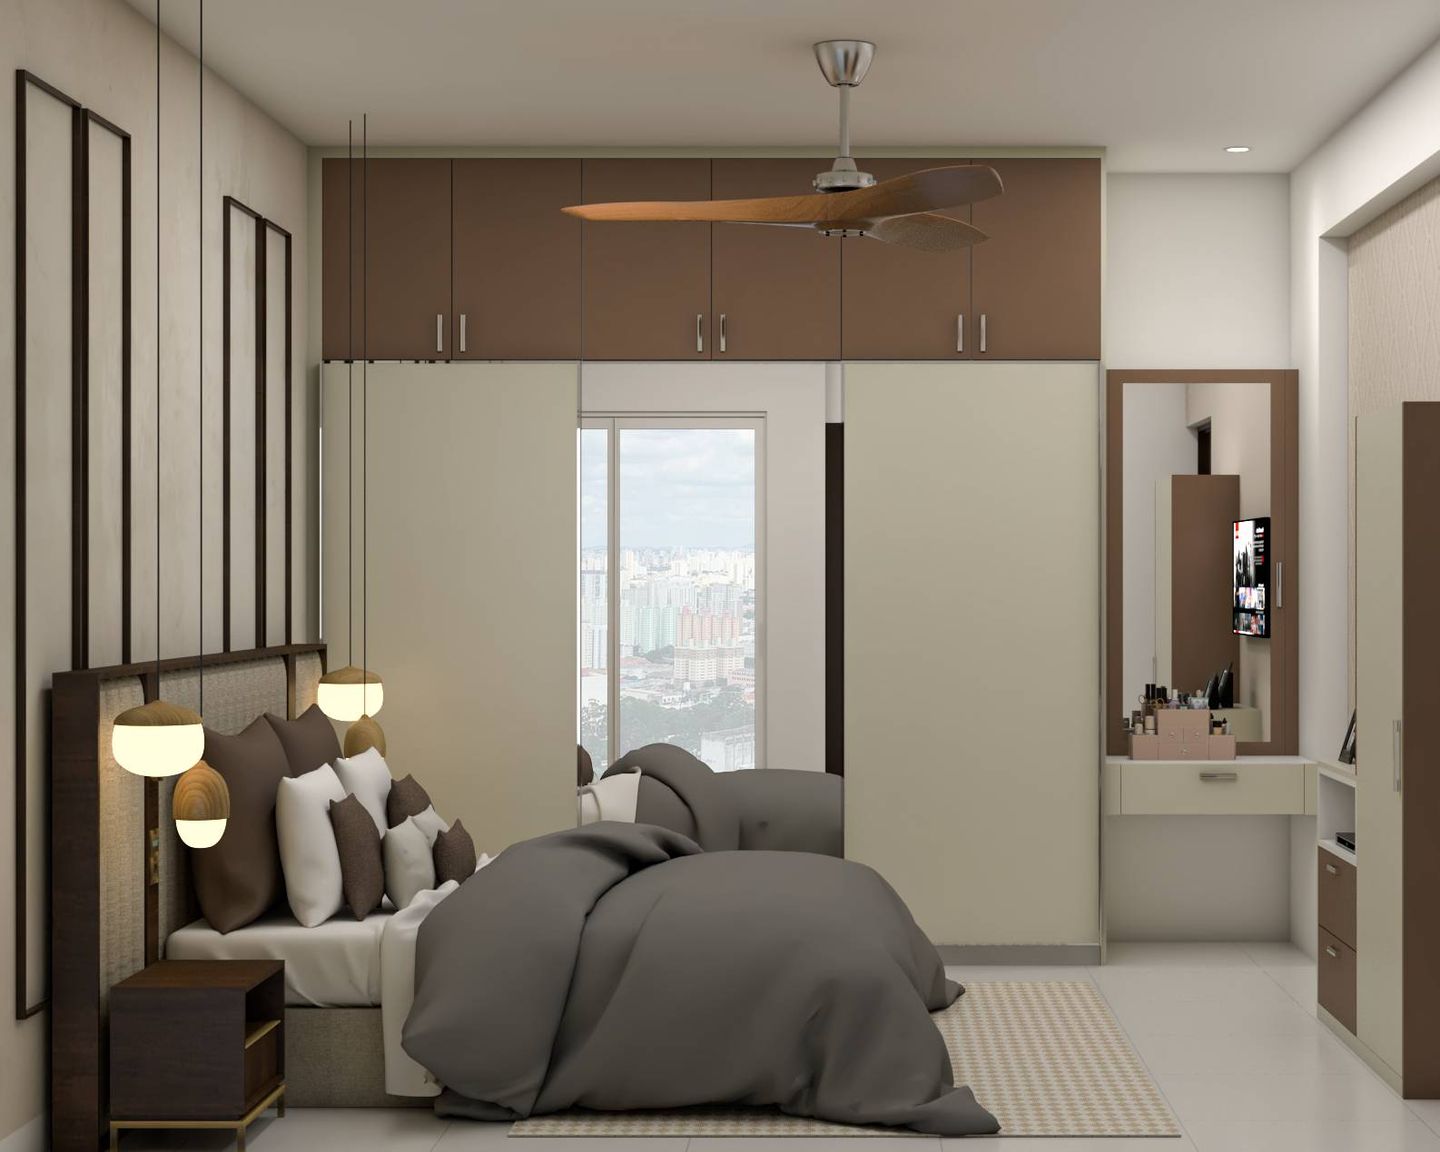 Mild Grey-Themed Master Bedroom Design With Black Trims